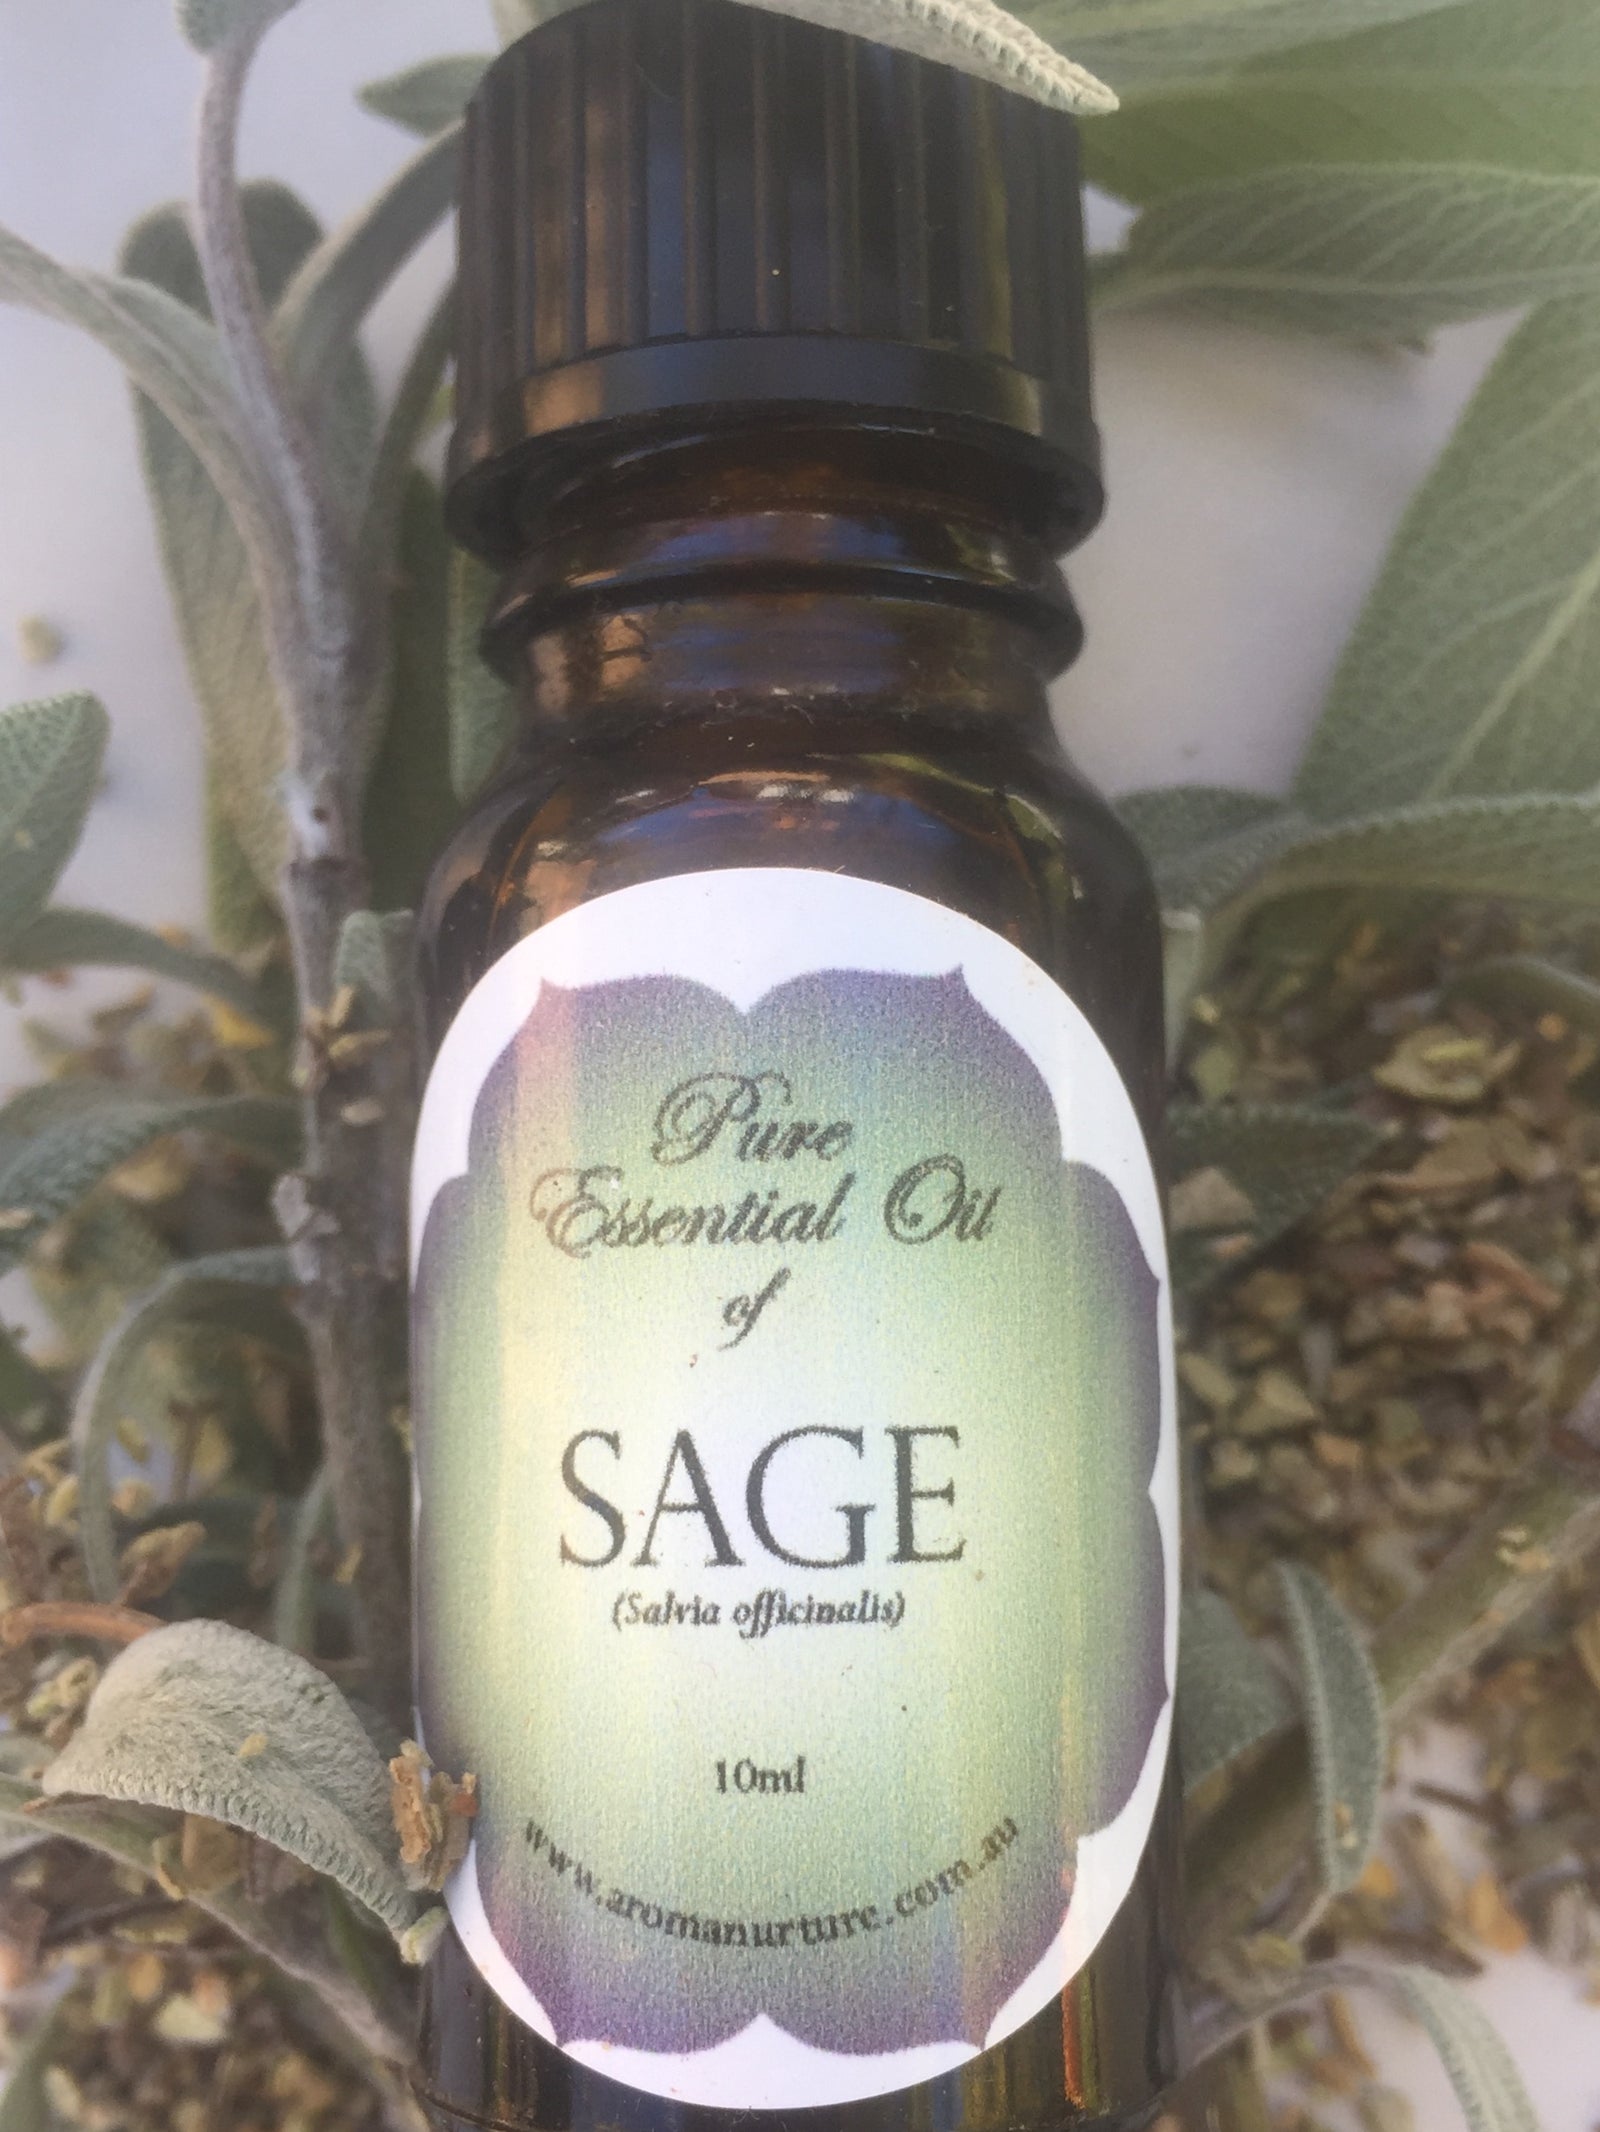 Pure Essential oil of Sage 10mls.(Salvia lavendulaefolia).